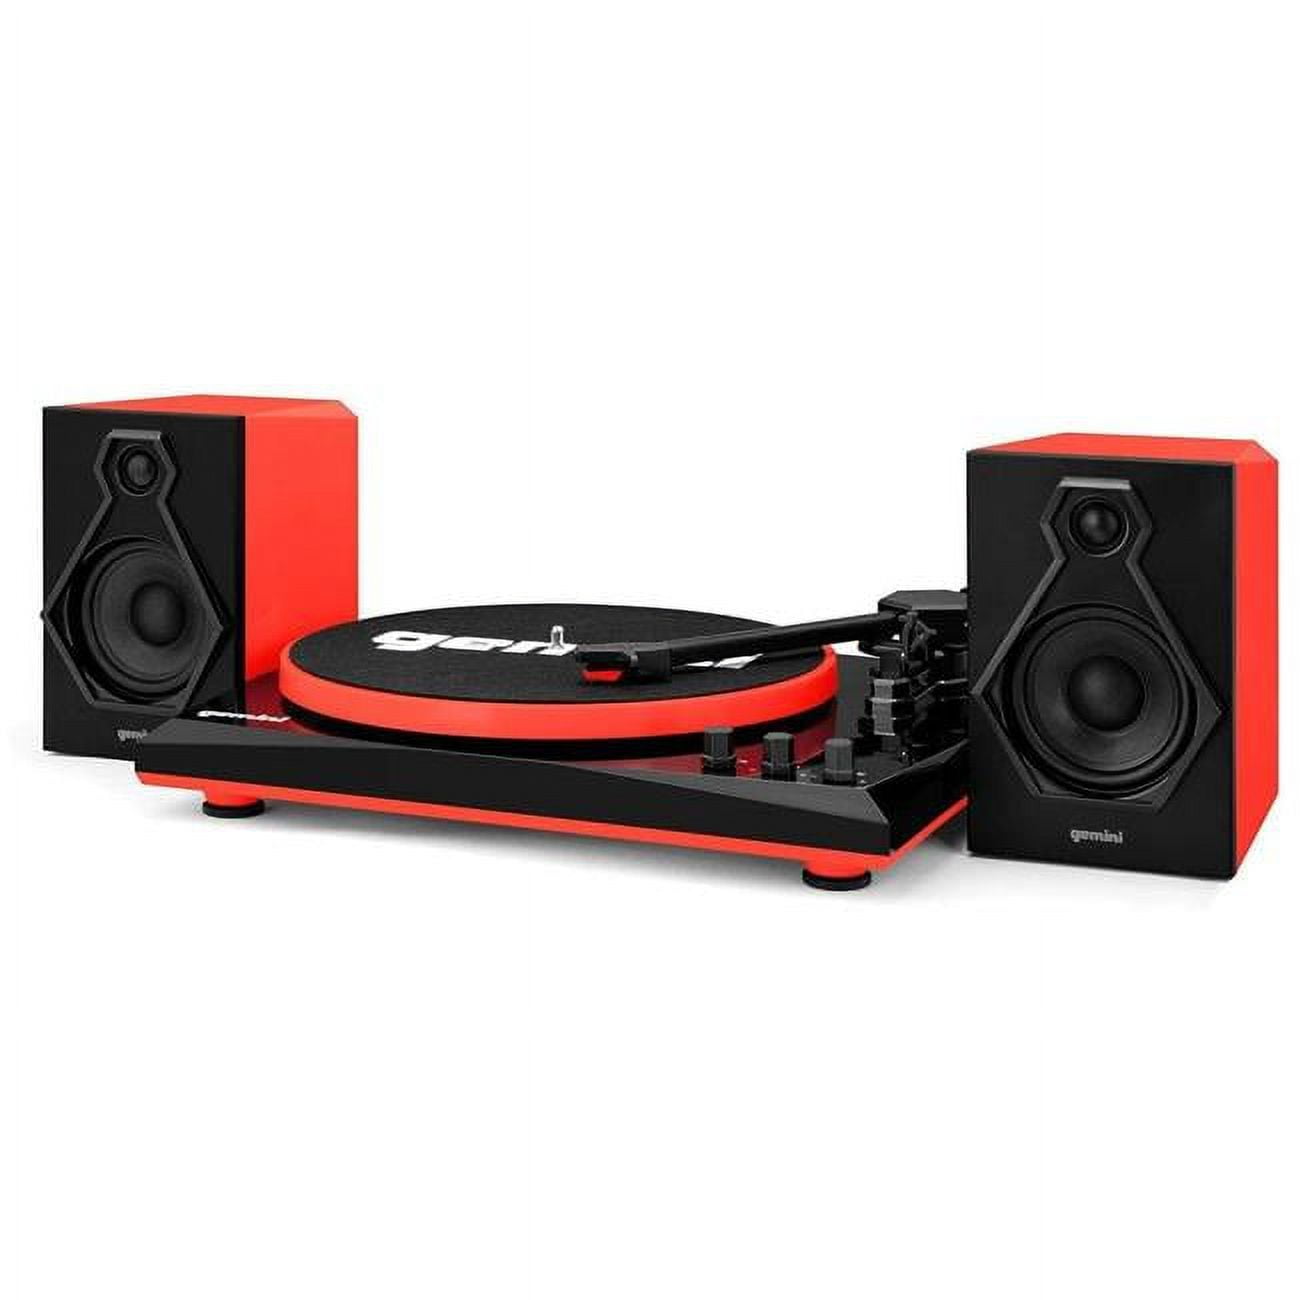 Gemini TT-900 Bluetooth Turntable with Stereo Speakers - Black/Red